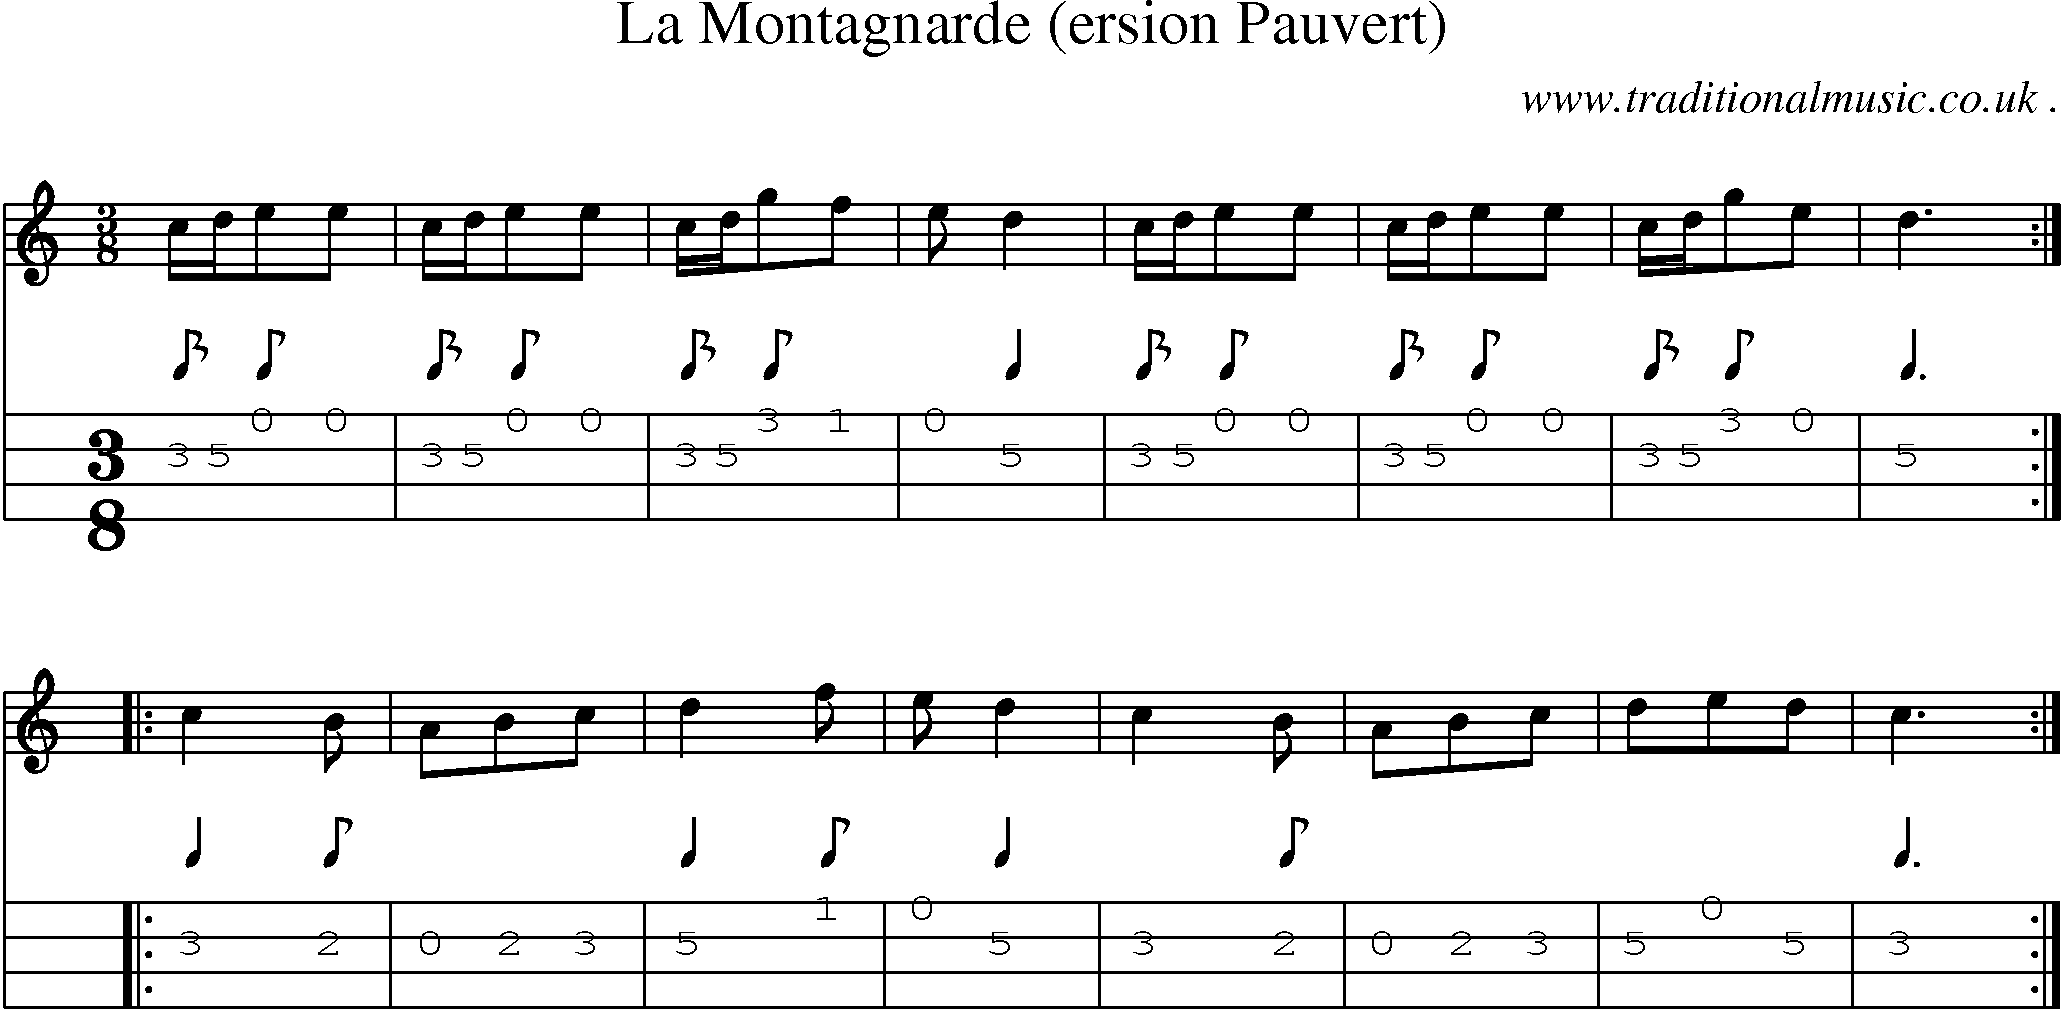 Sheet-Music and Mandolin Tabs for La Montagnarde (ersion Pauvert)